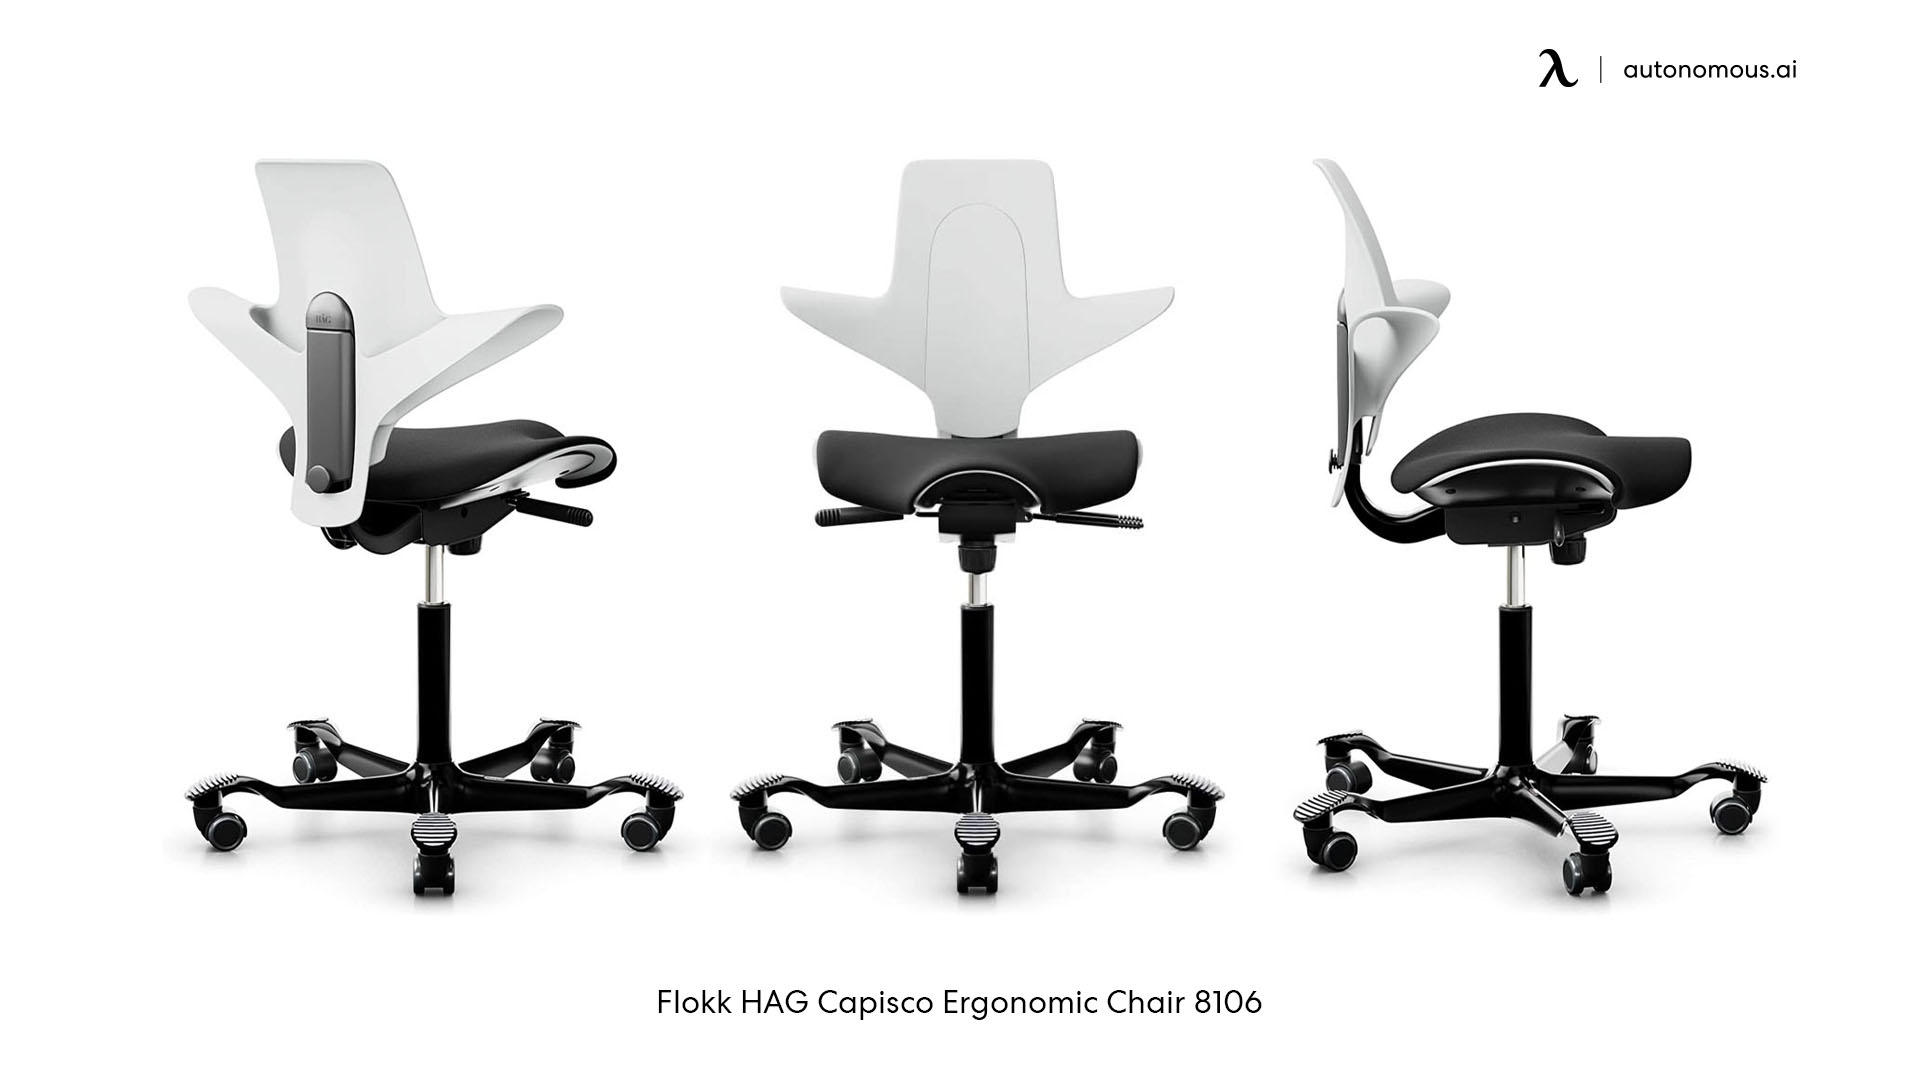 Hag Capisco best office chair for sciatica